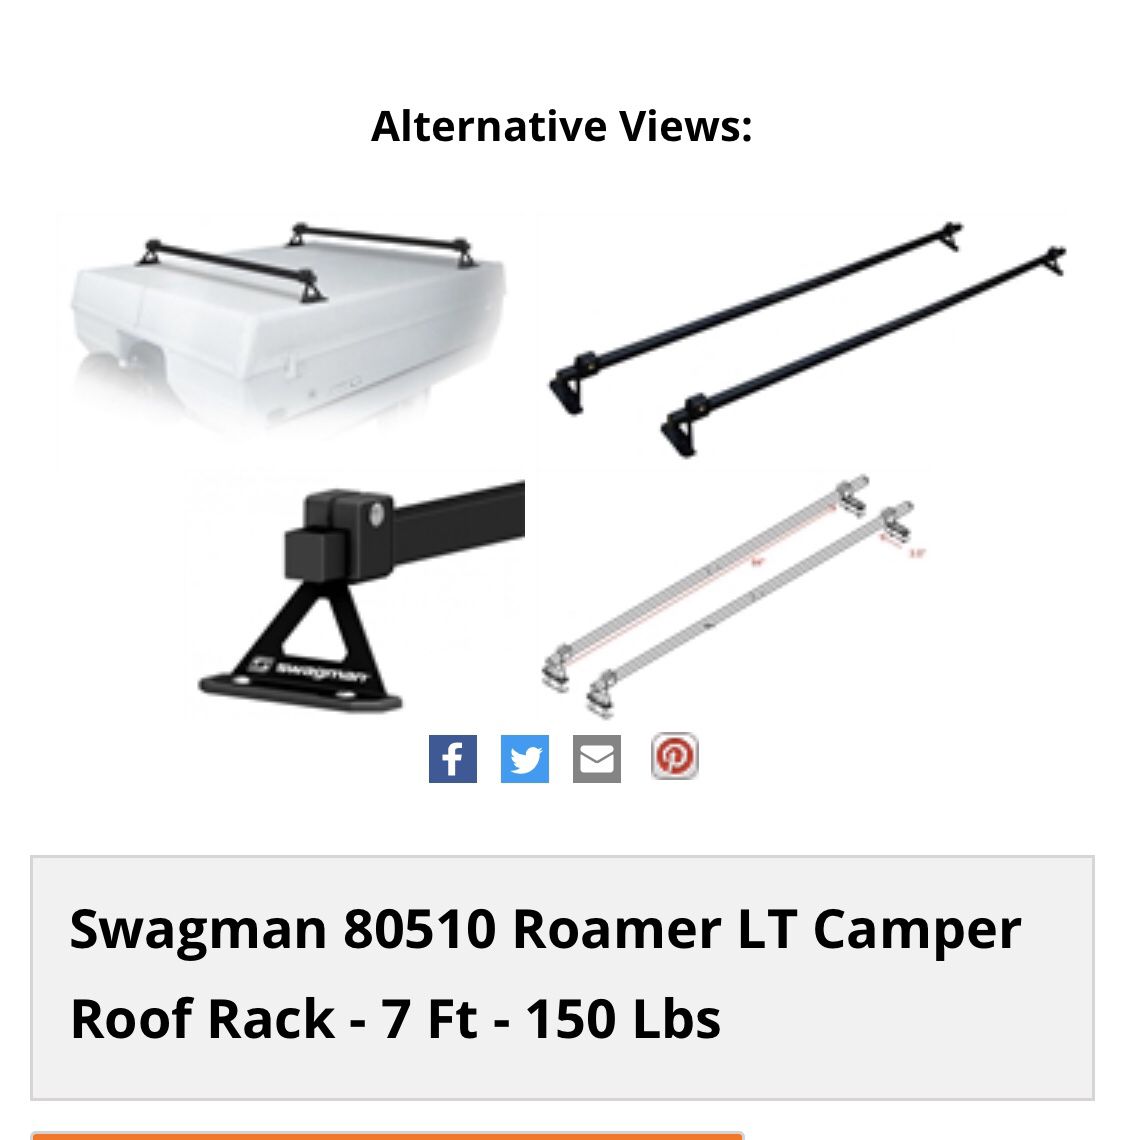 Swagman 80510 roamer LT camper Roof Rack -7 ft -150Lbs brand new in the box